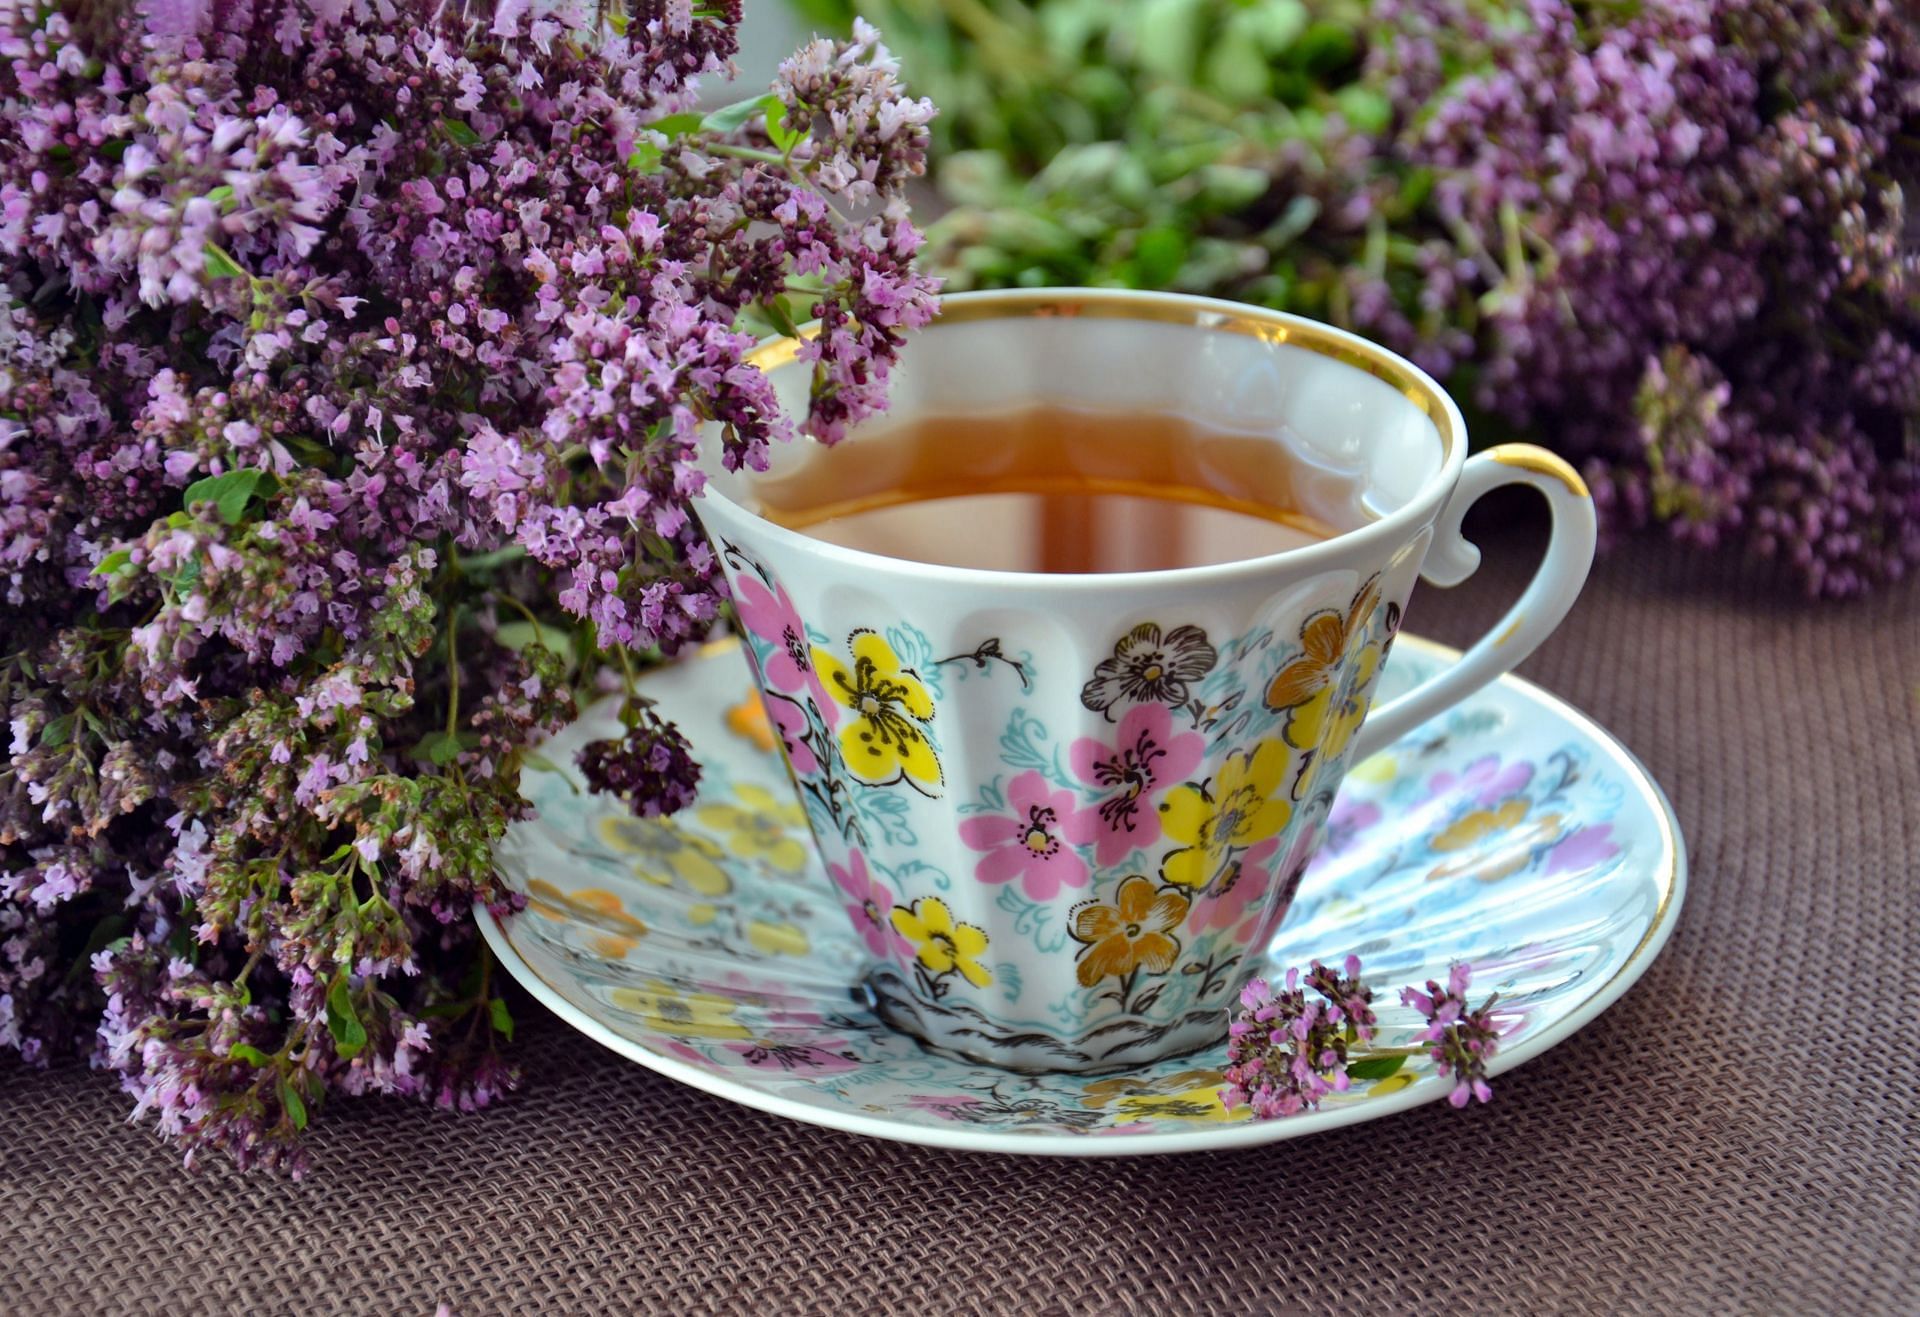 Yellow tea benefits (Image sourced via Pexels/Photo by mareefe)